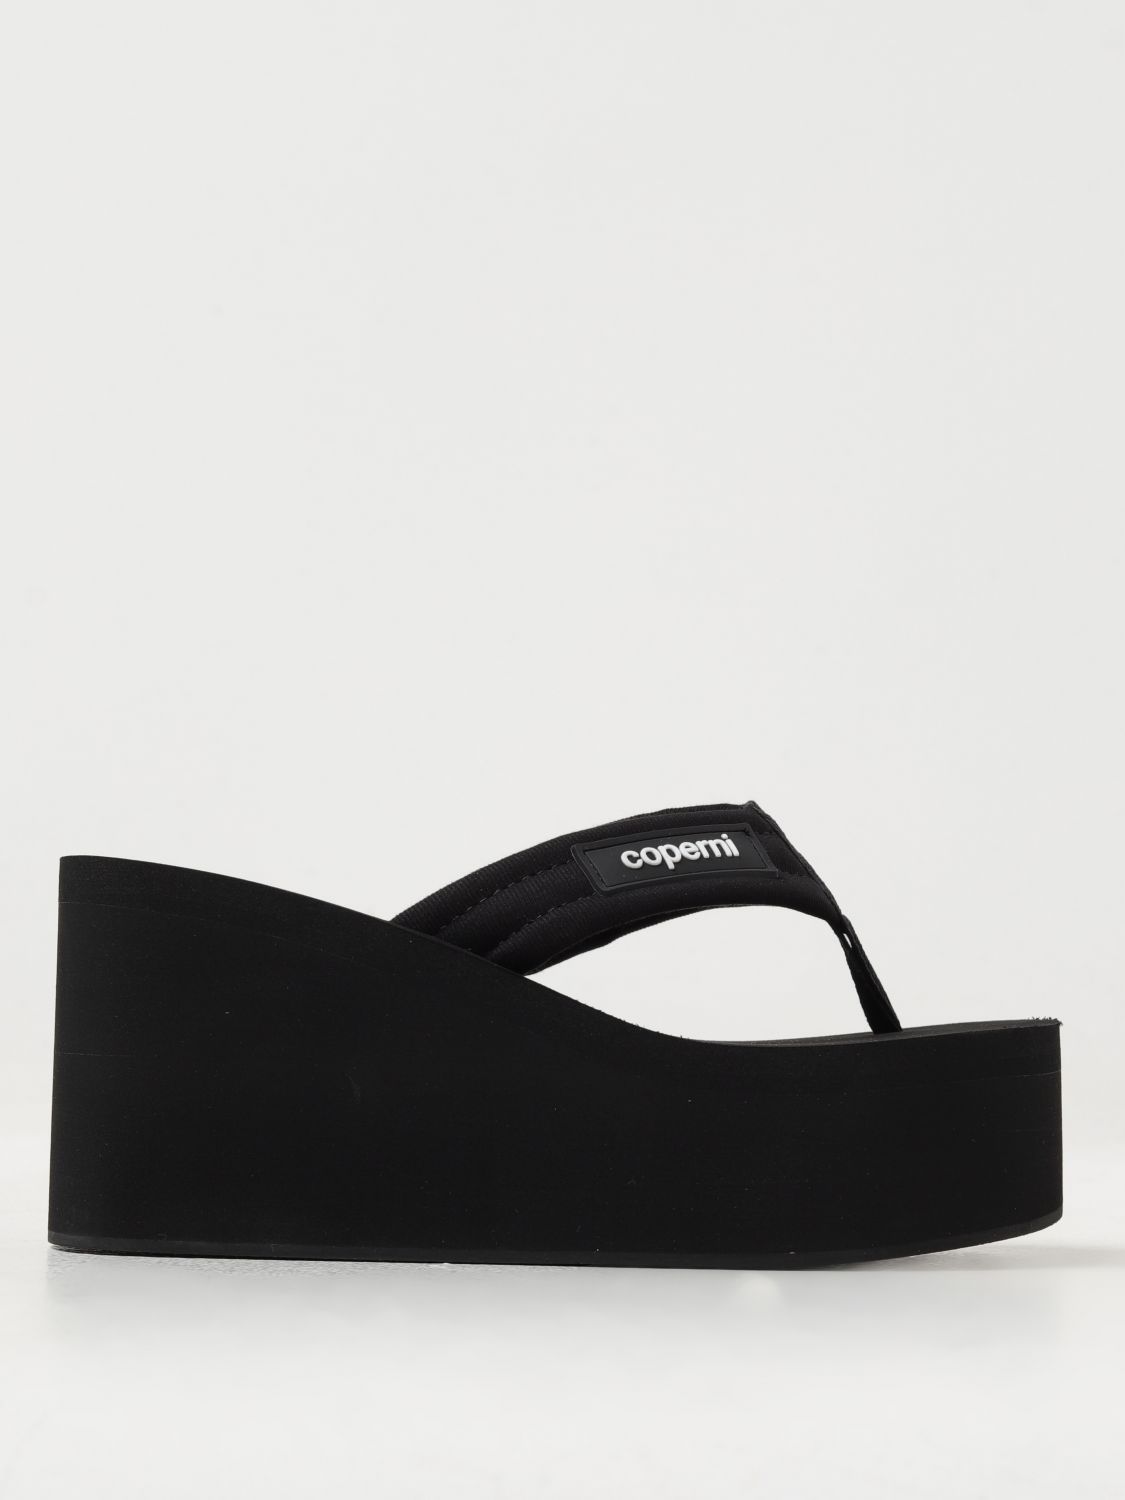 Coperni Wedge Shoes COPERNI Woman colour Black